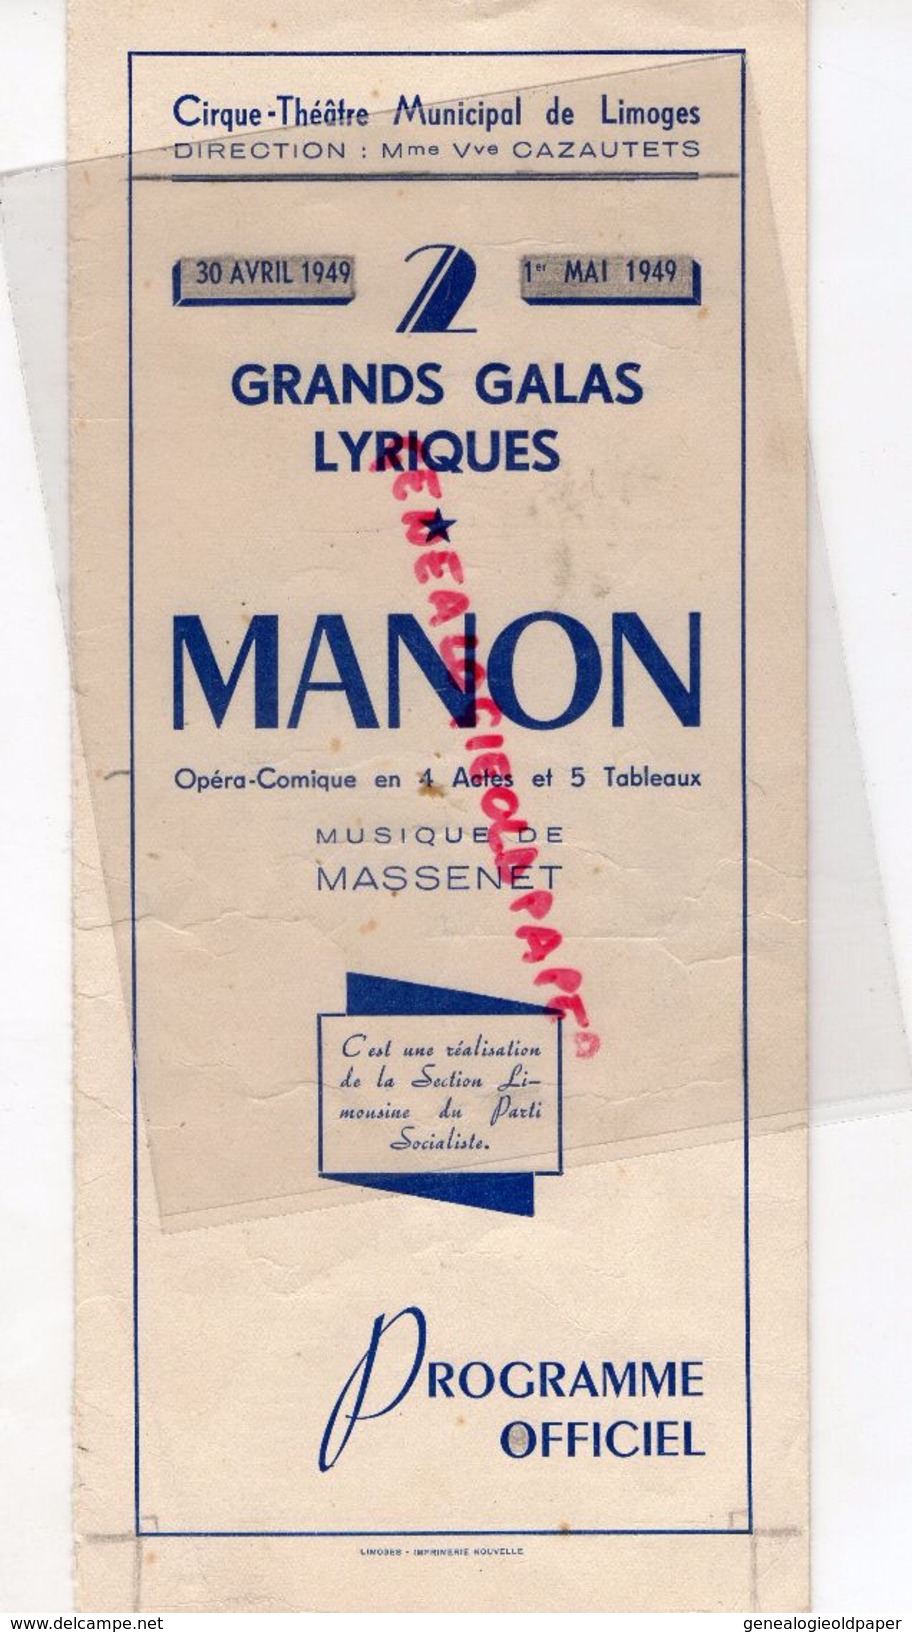 87 -LIMOGES- PROGRAMME CIRQUE THEATRE-30 AVRIL -1 MAI 1949-MANON MASSENET-RENEE TARN-JOSE MALLABRERA-MARIO FRANZINI - Programas